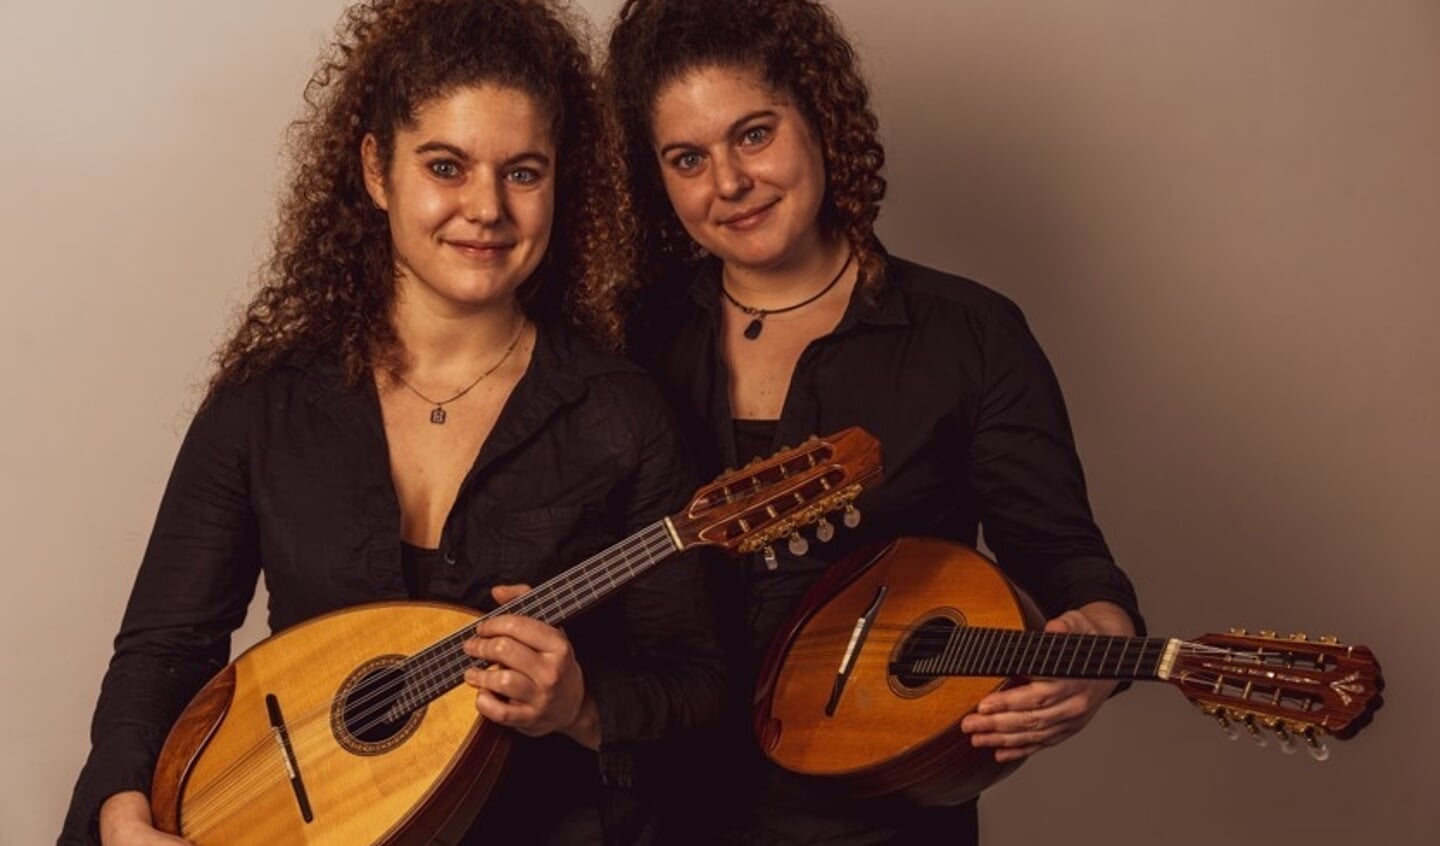 De Griekse zusjes Markatatou zijn virtuoos op de mandoline.